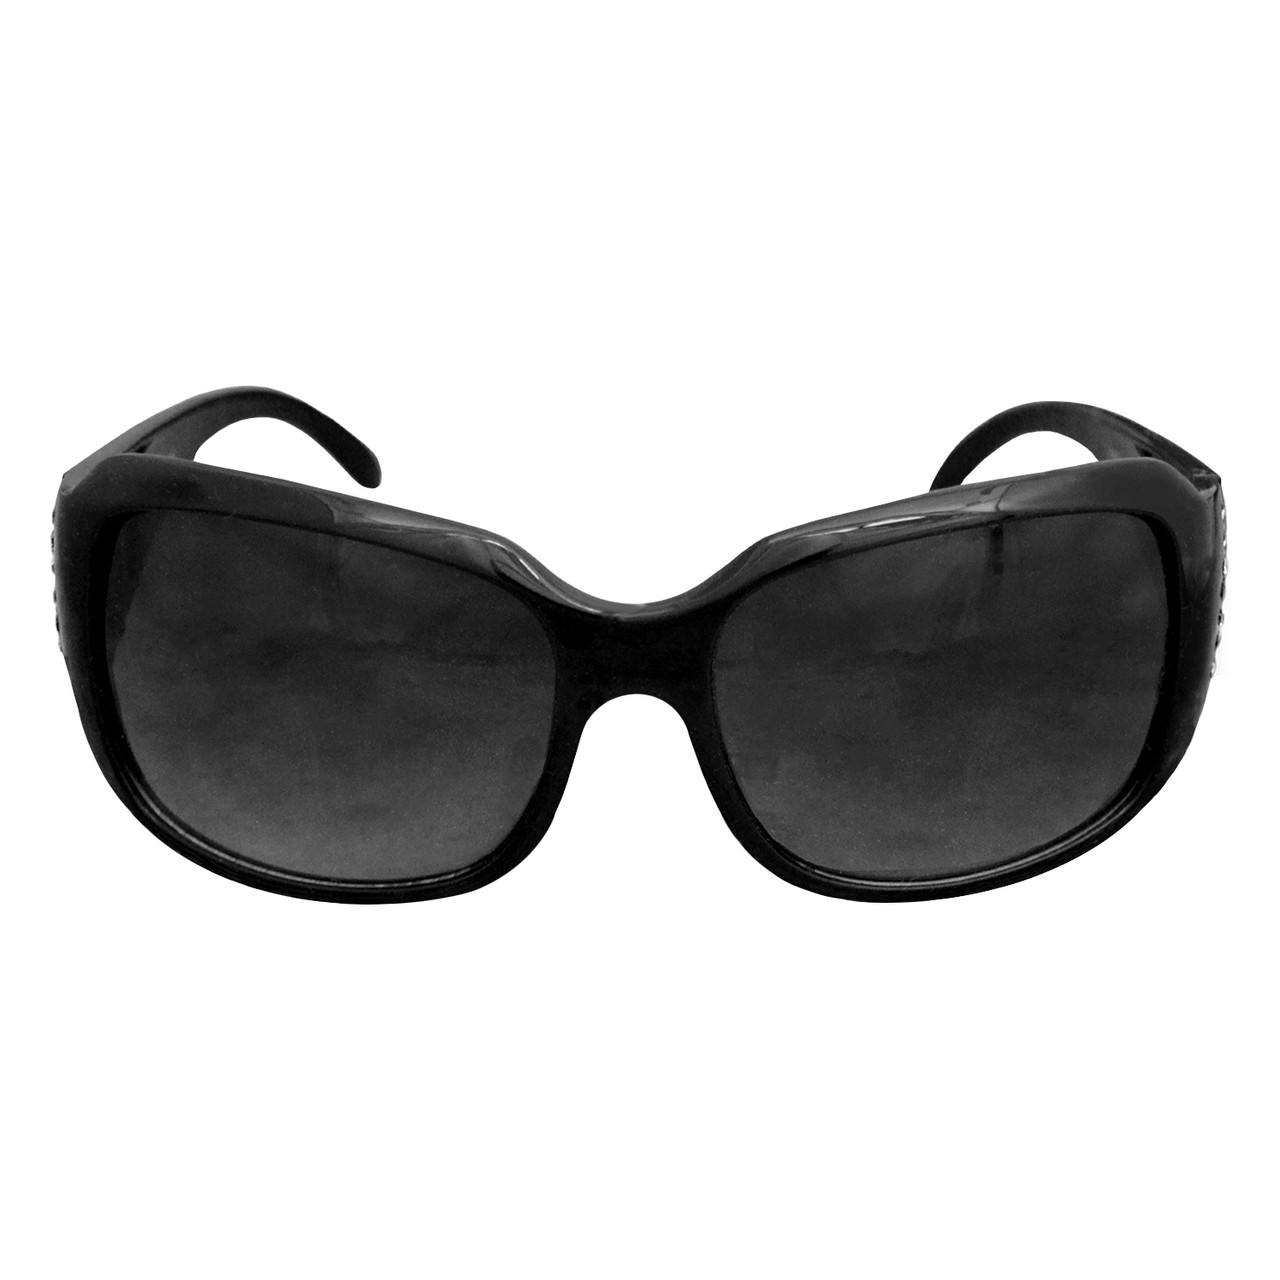 Western Michigan Broncos Brunch Fashion College Sunglasses (Black)